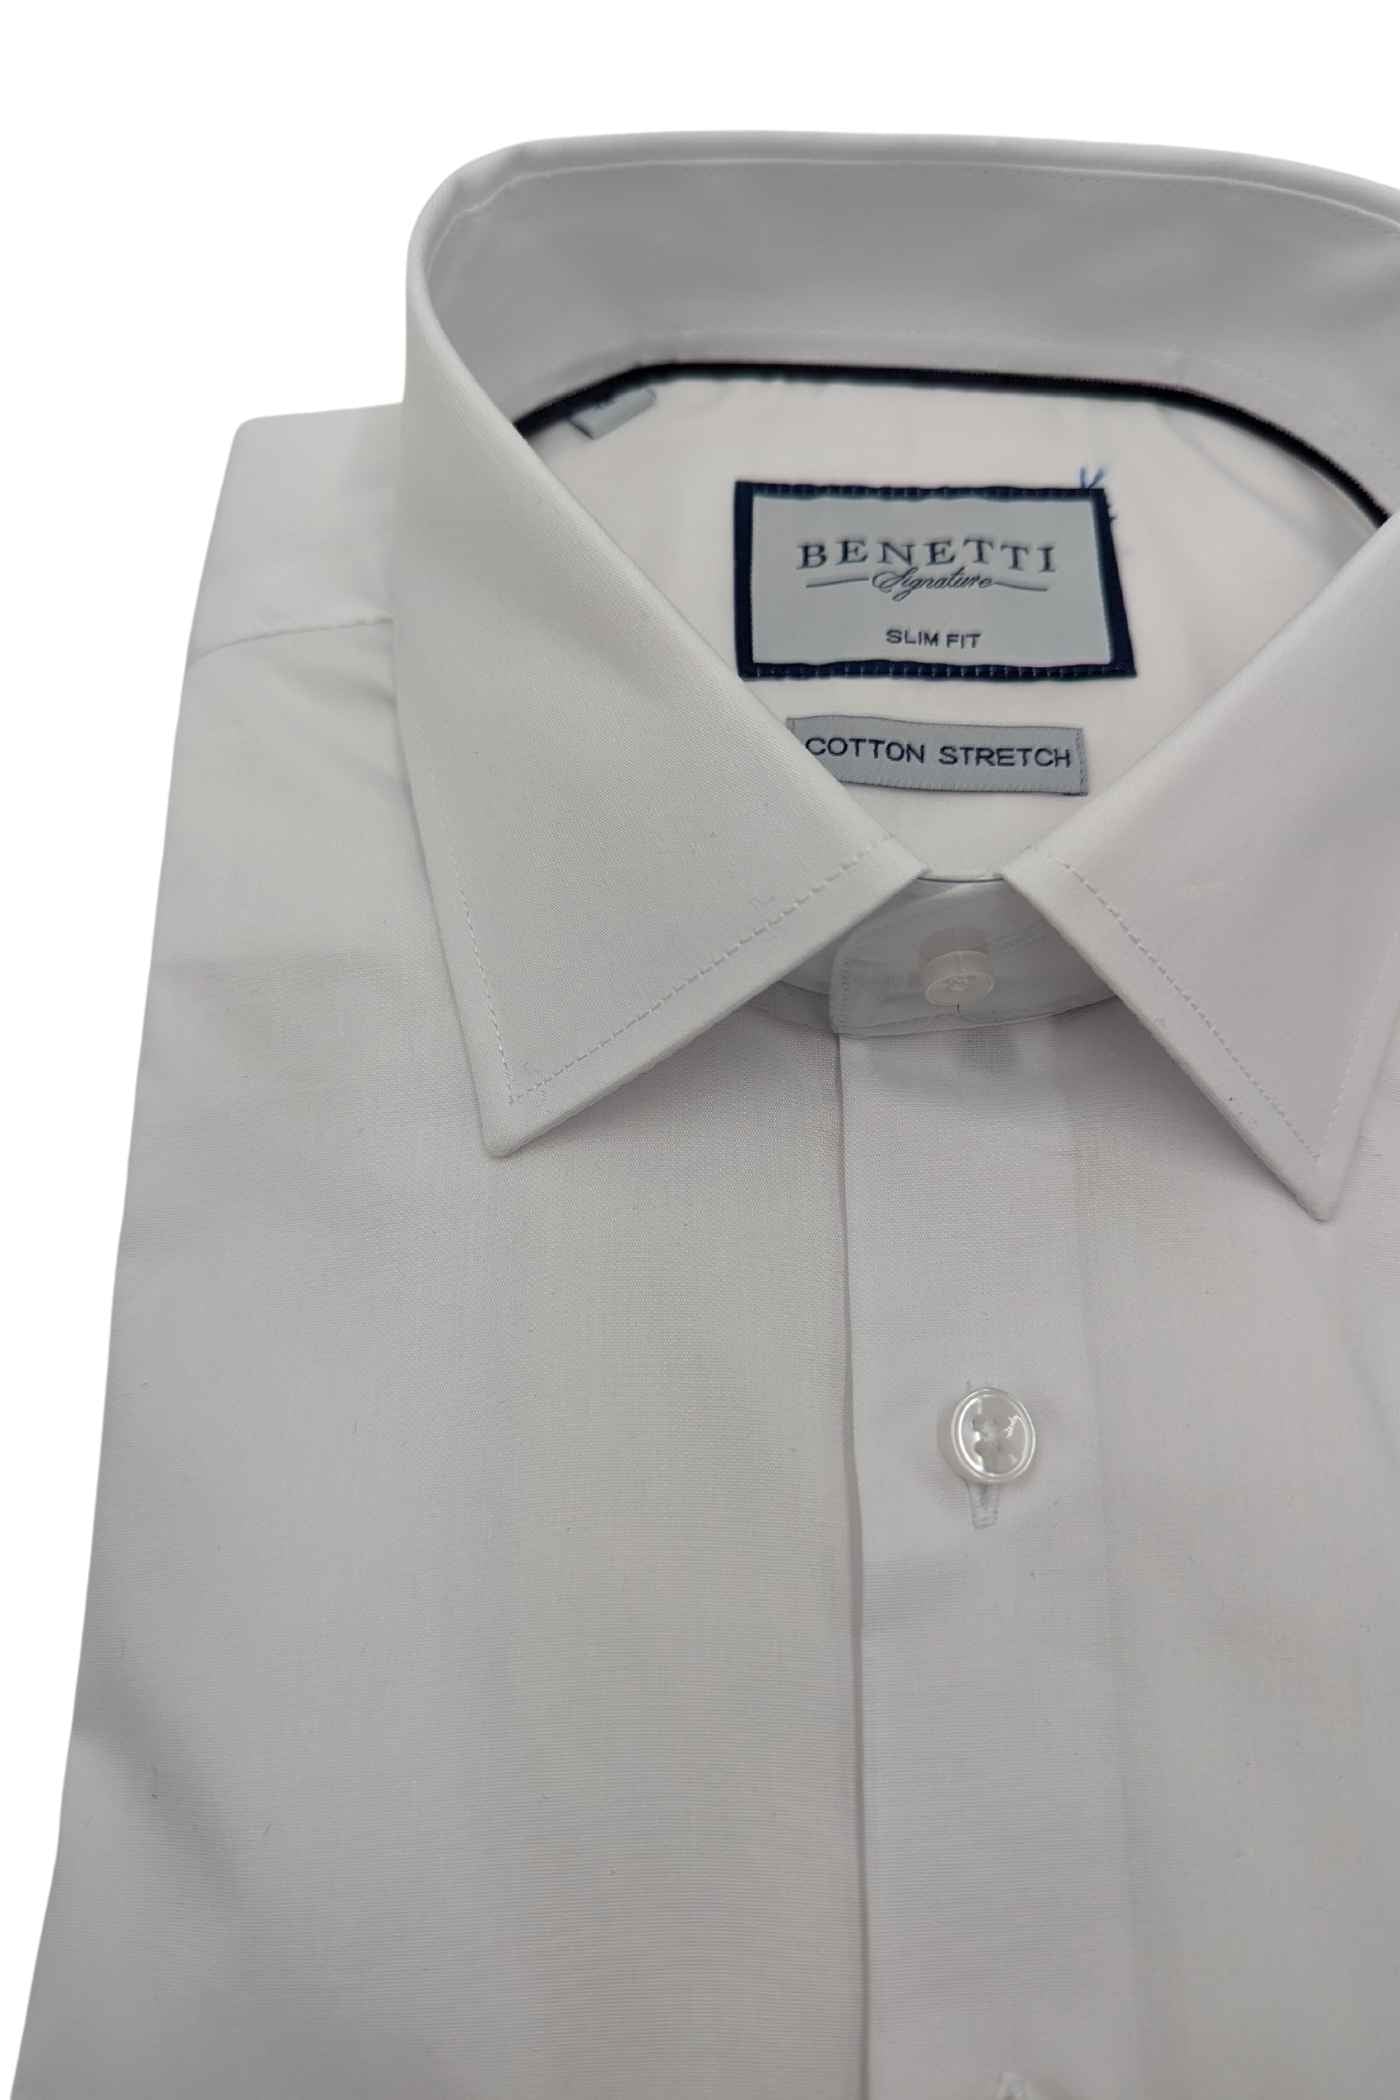 Oscar White Slim Fit Shirt-Close up view